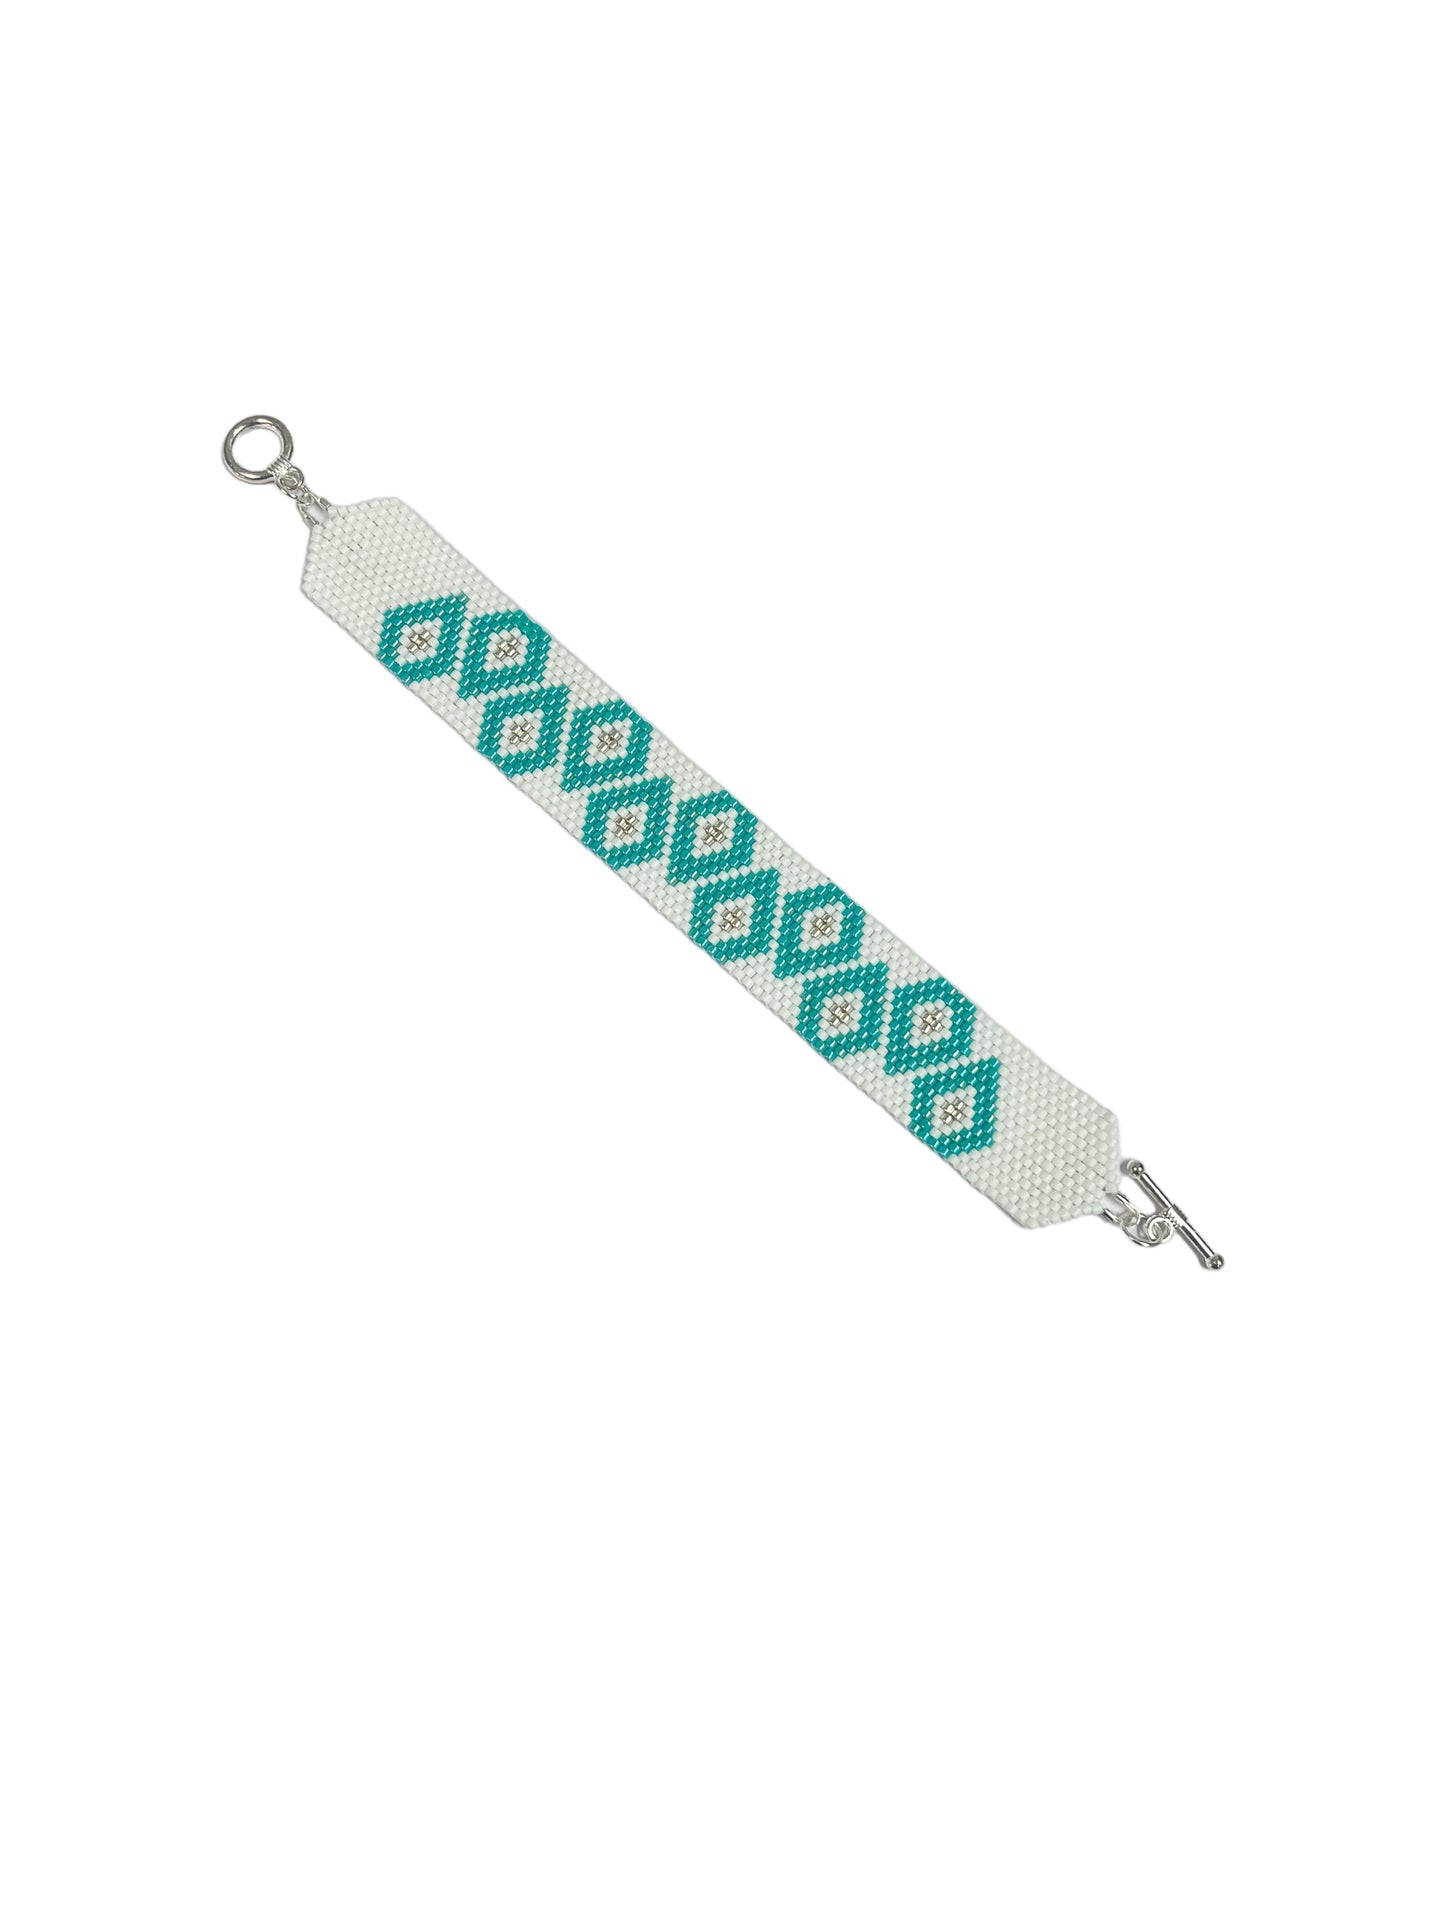 Aqua and White Diamond Beaded Bracelet